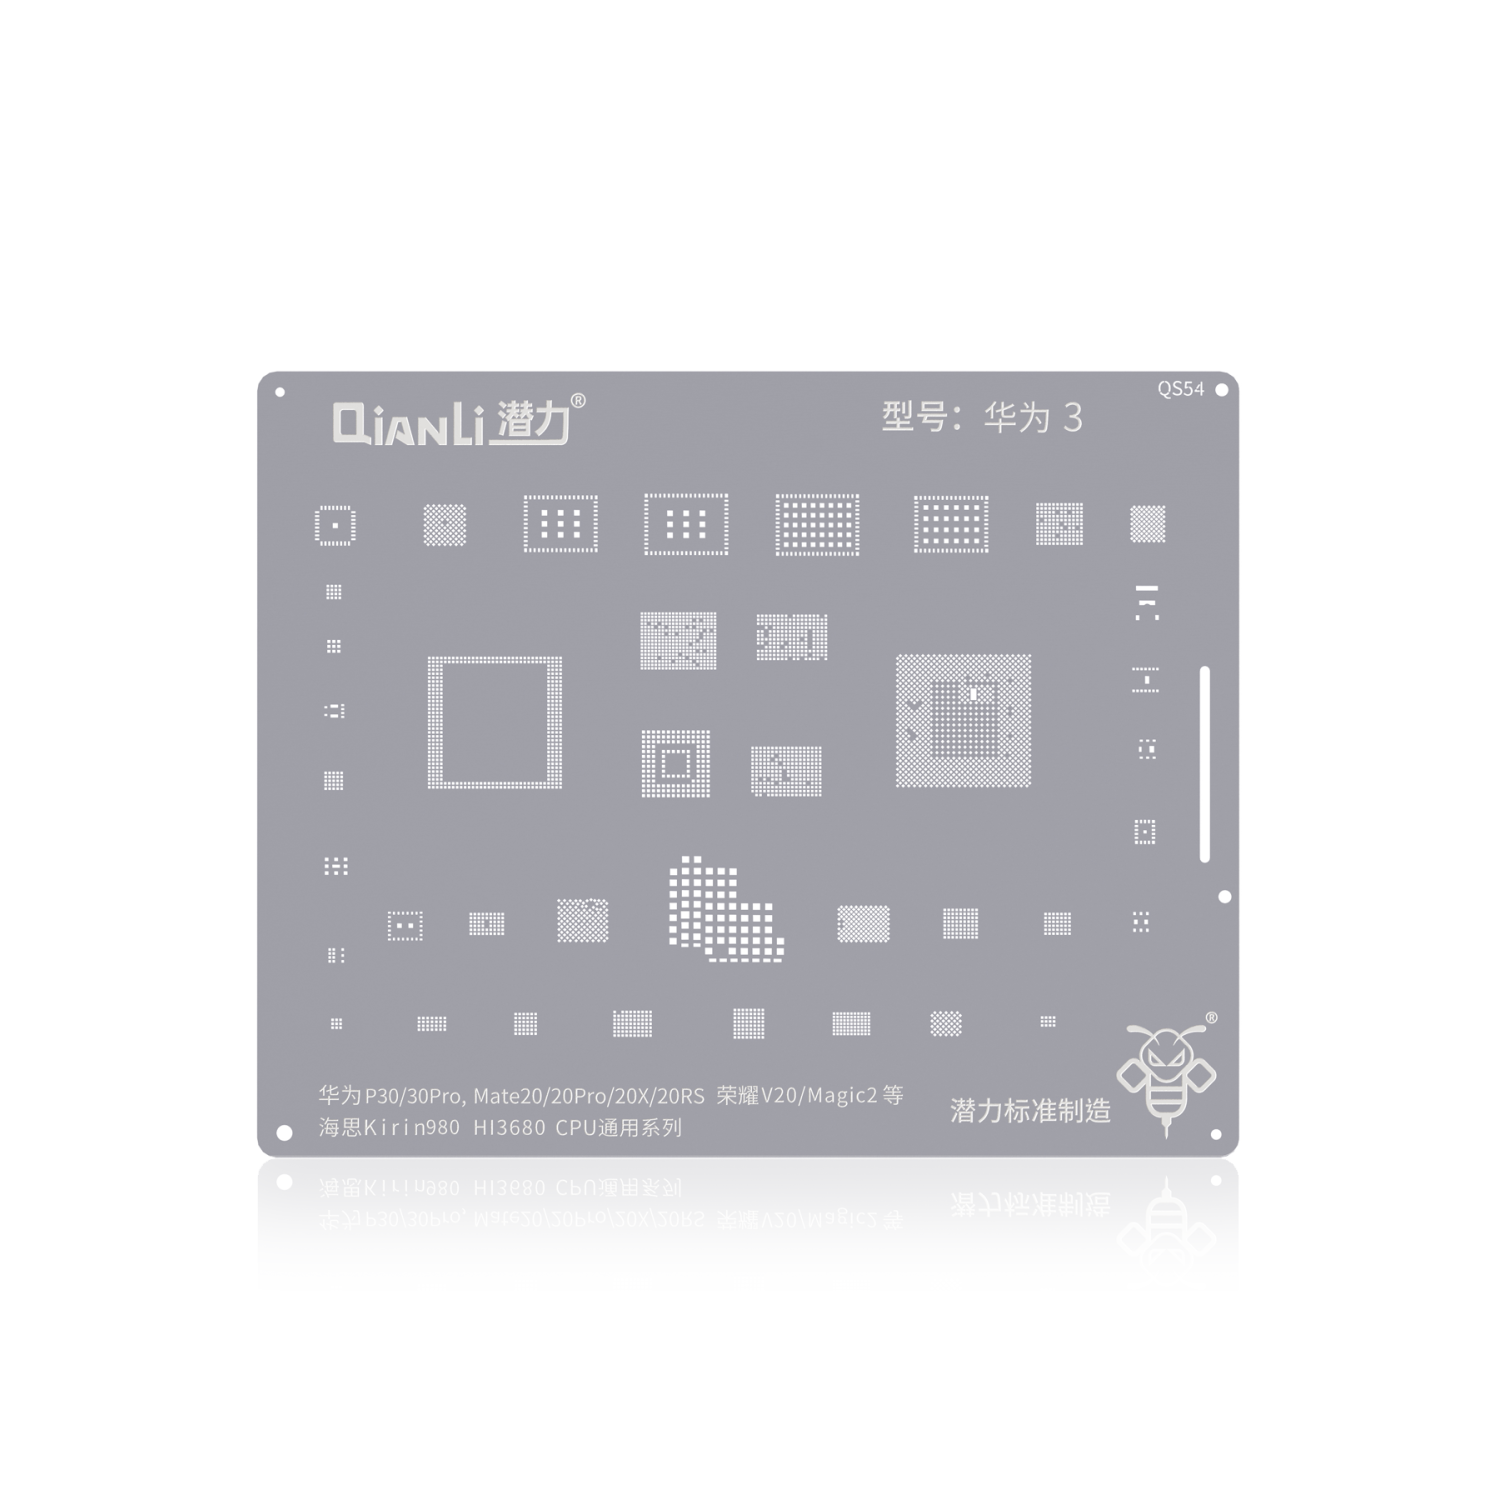 Replacement Bumblebee Stencil (QS54) For Huawei P30 / 30Pro / Mate20 / 20Pro / 20X / 20RS / Honor V20 / Magic 2 (Kirin980) (HI3680) CPU Universal Series (Qianli)